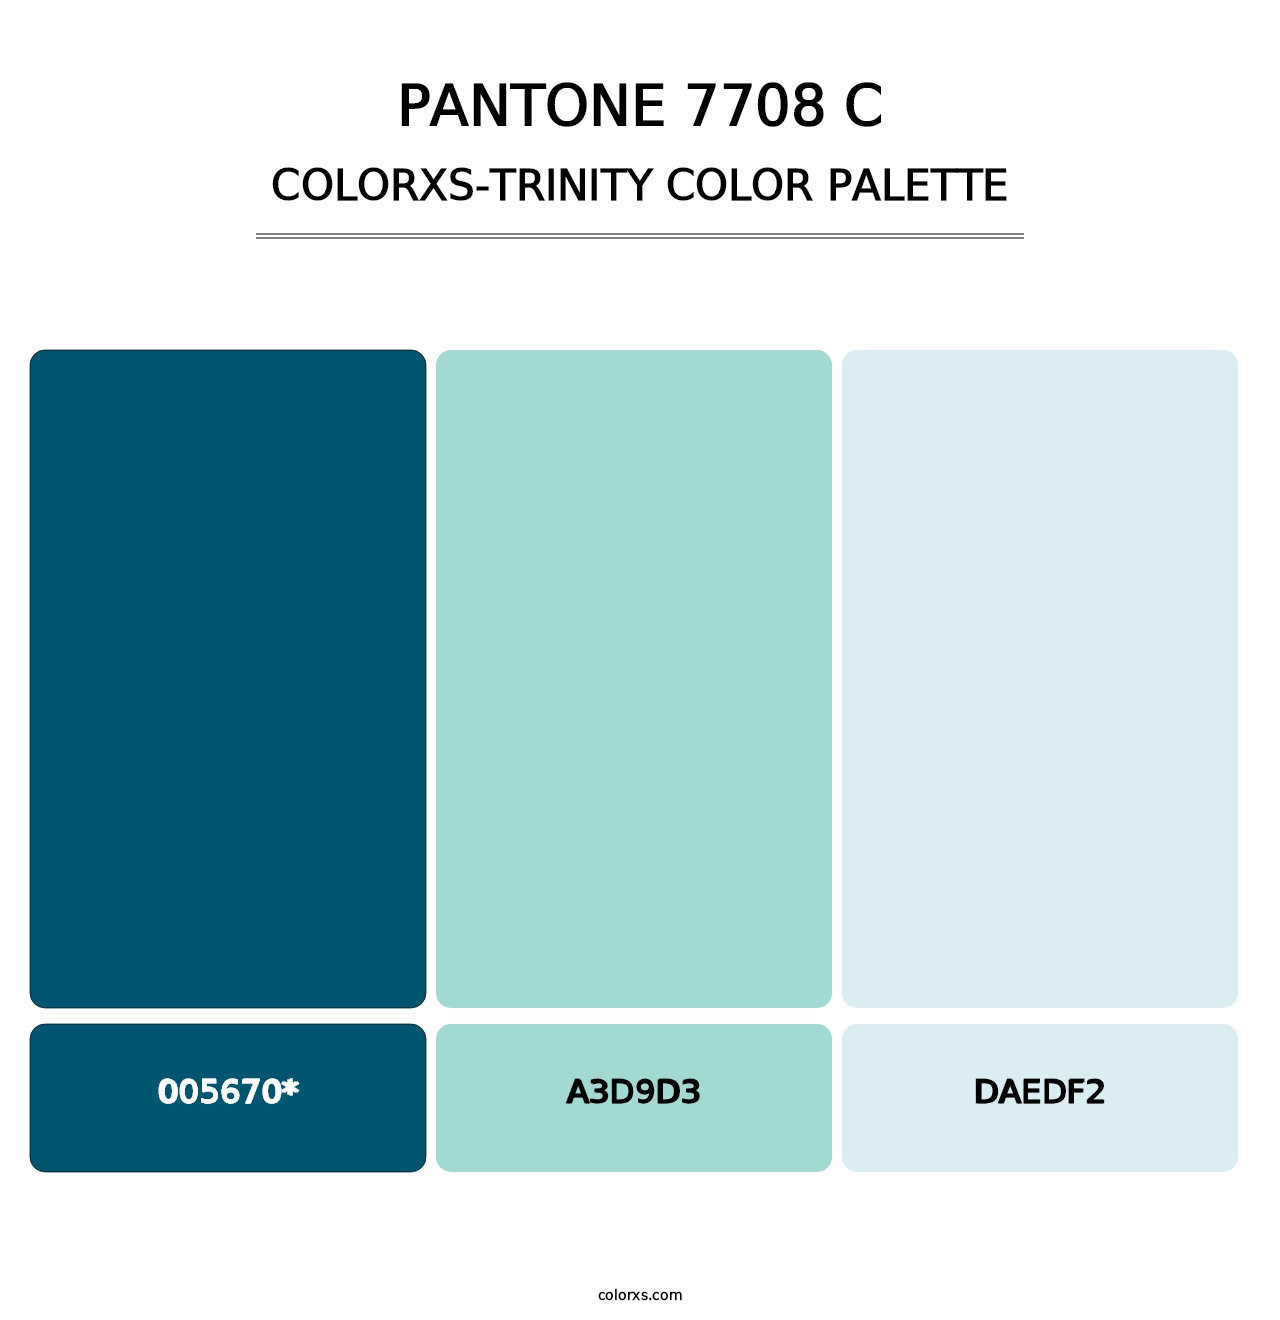 PANTONE 7708 C - Colorxs Trinity Palette